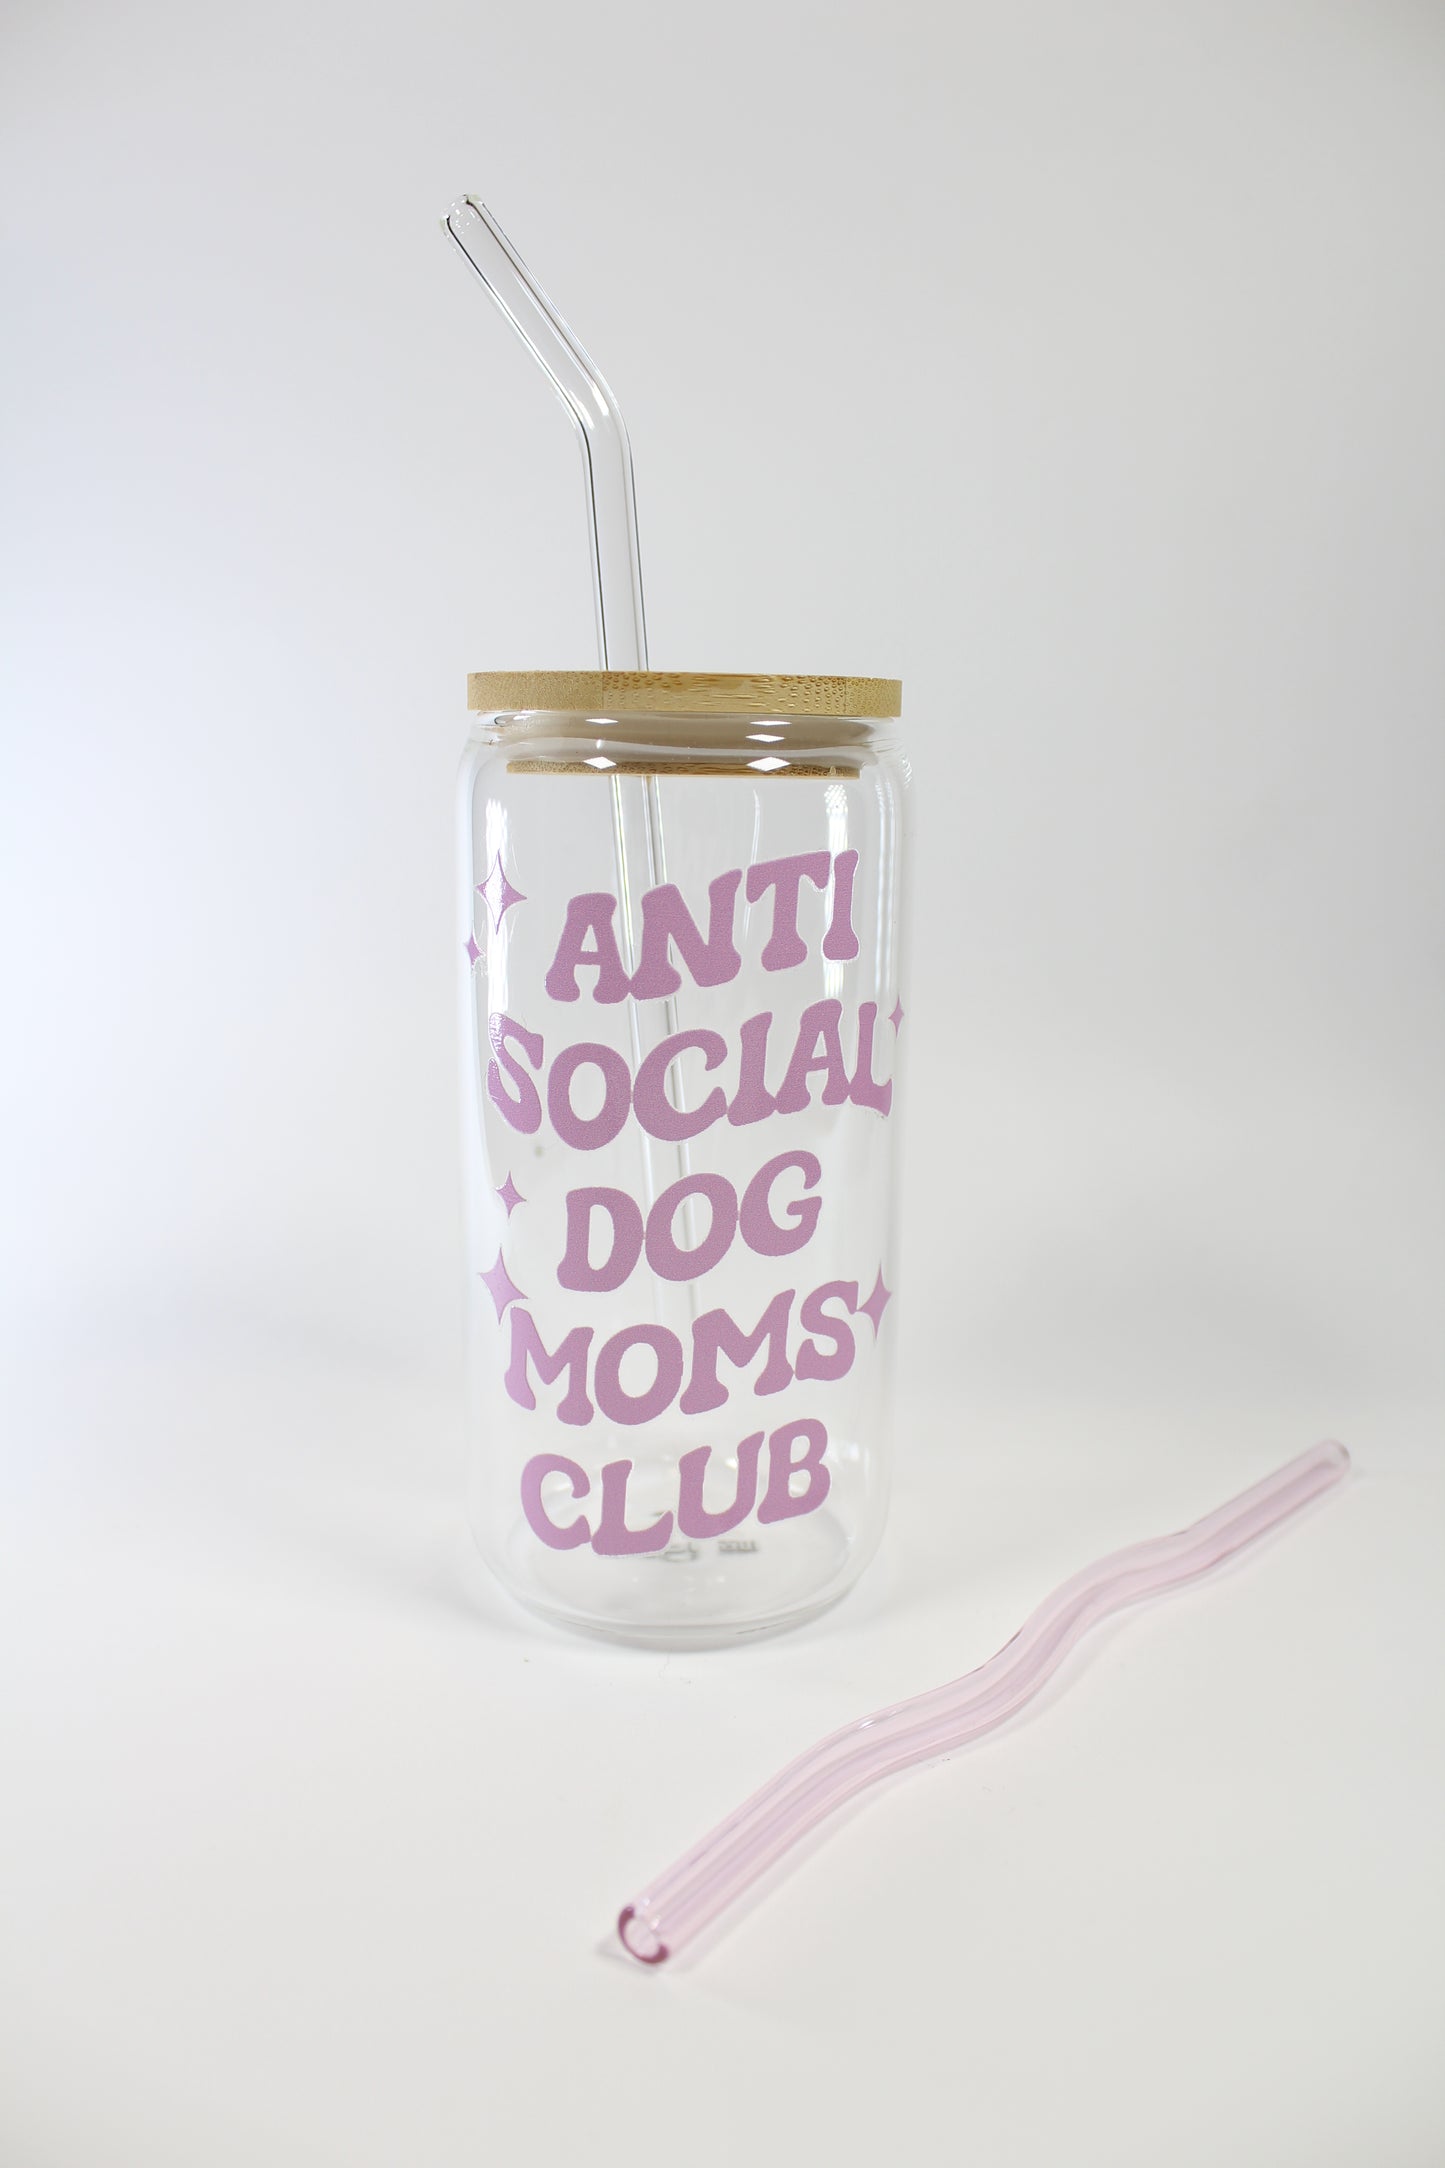 Antisocial dog moms club 🐶🤘🏻